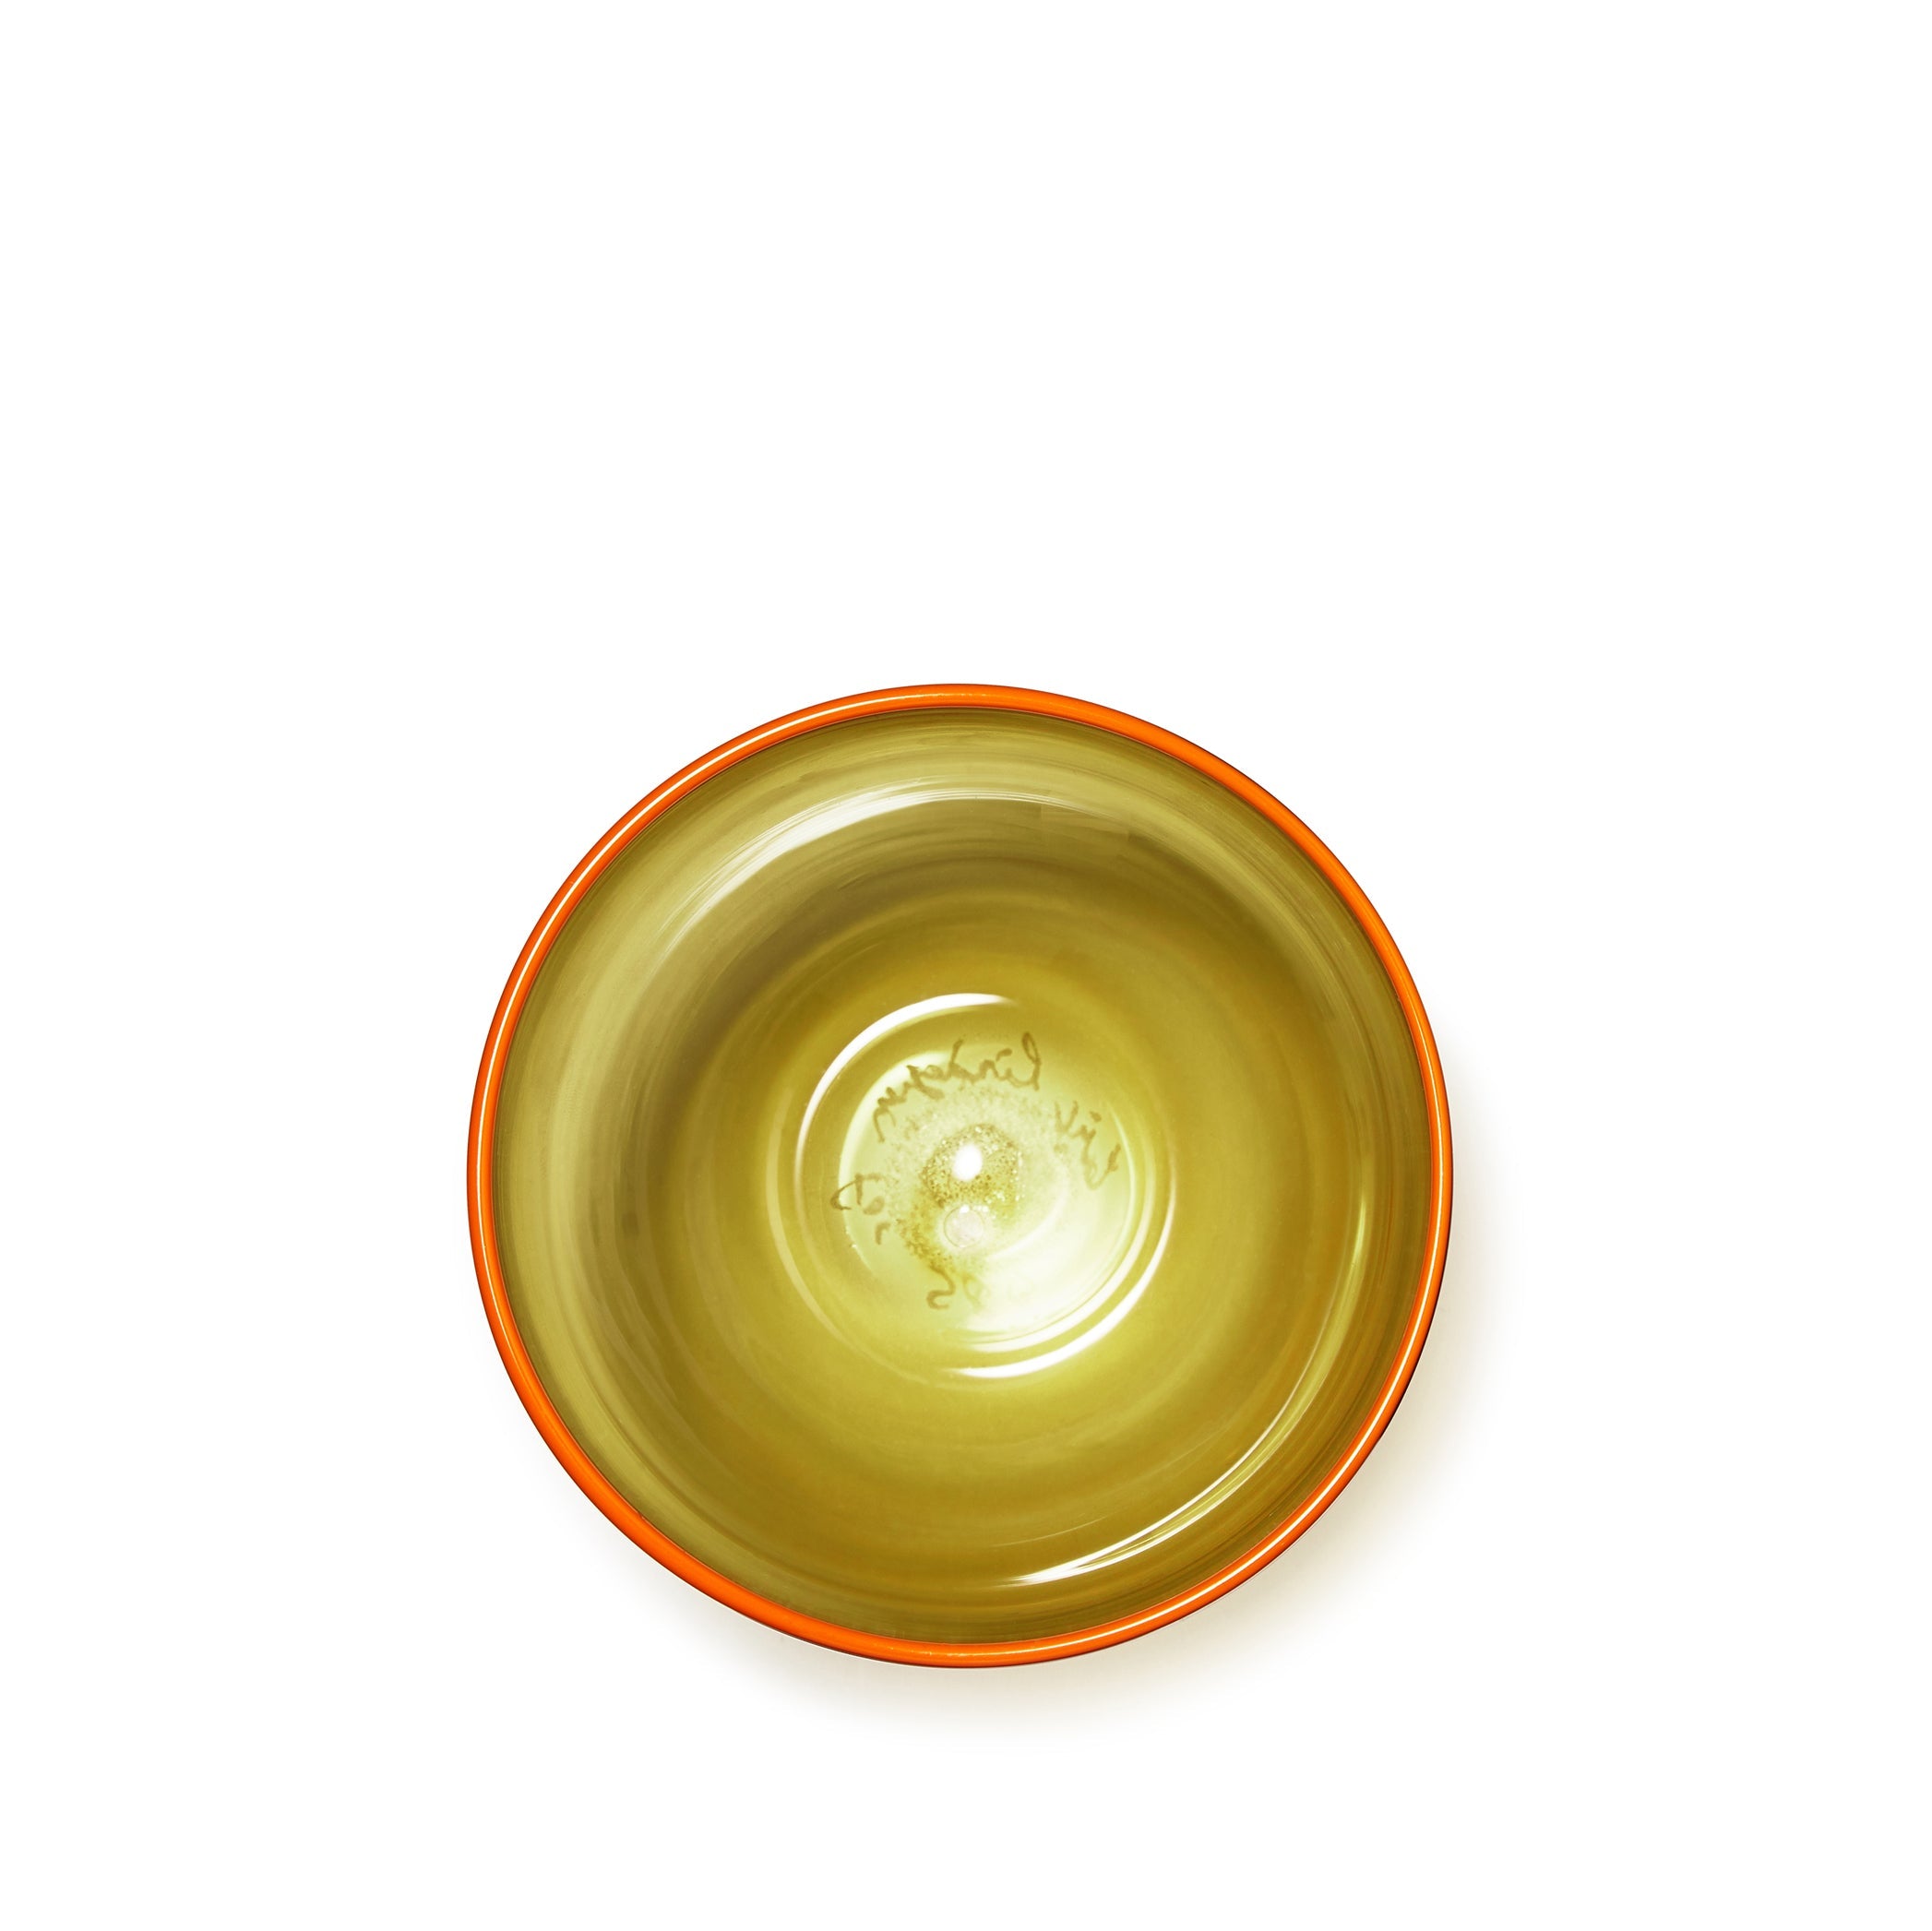 Handblown Bumba Glass in Moss Green with Orange Rim, 30cl